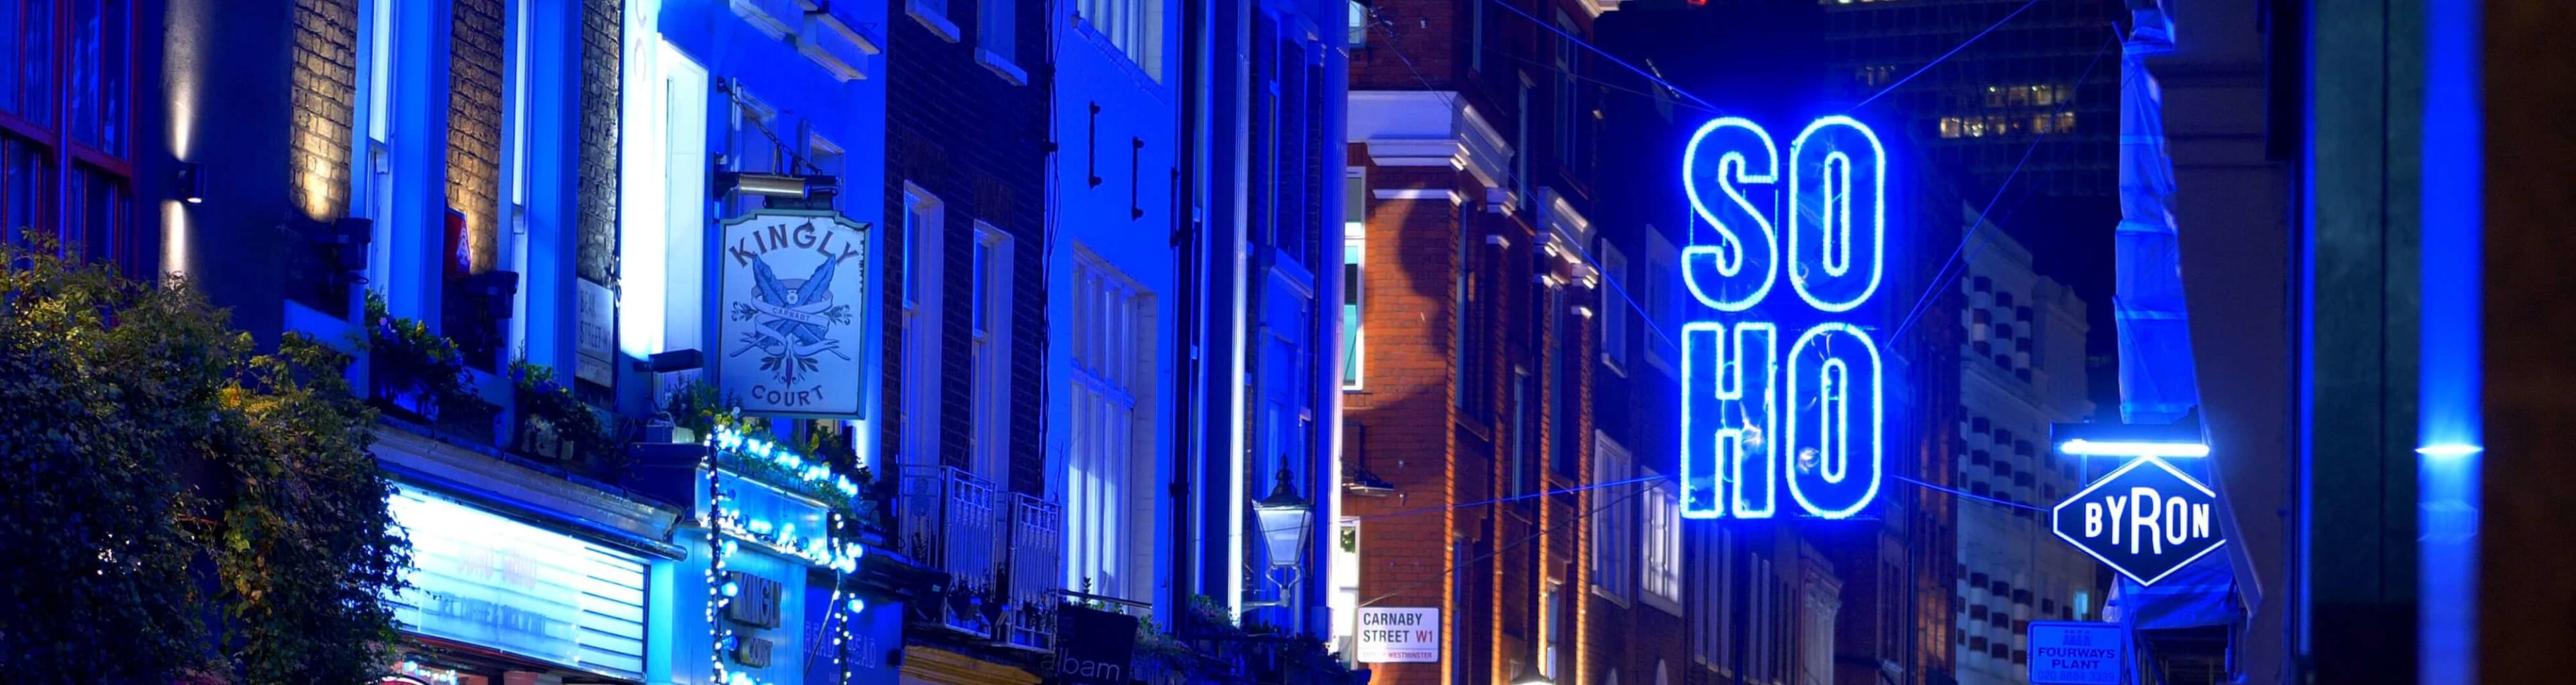 London's Soho lit up neon blue at night